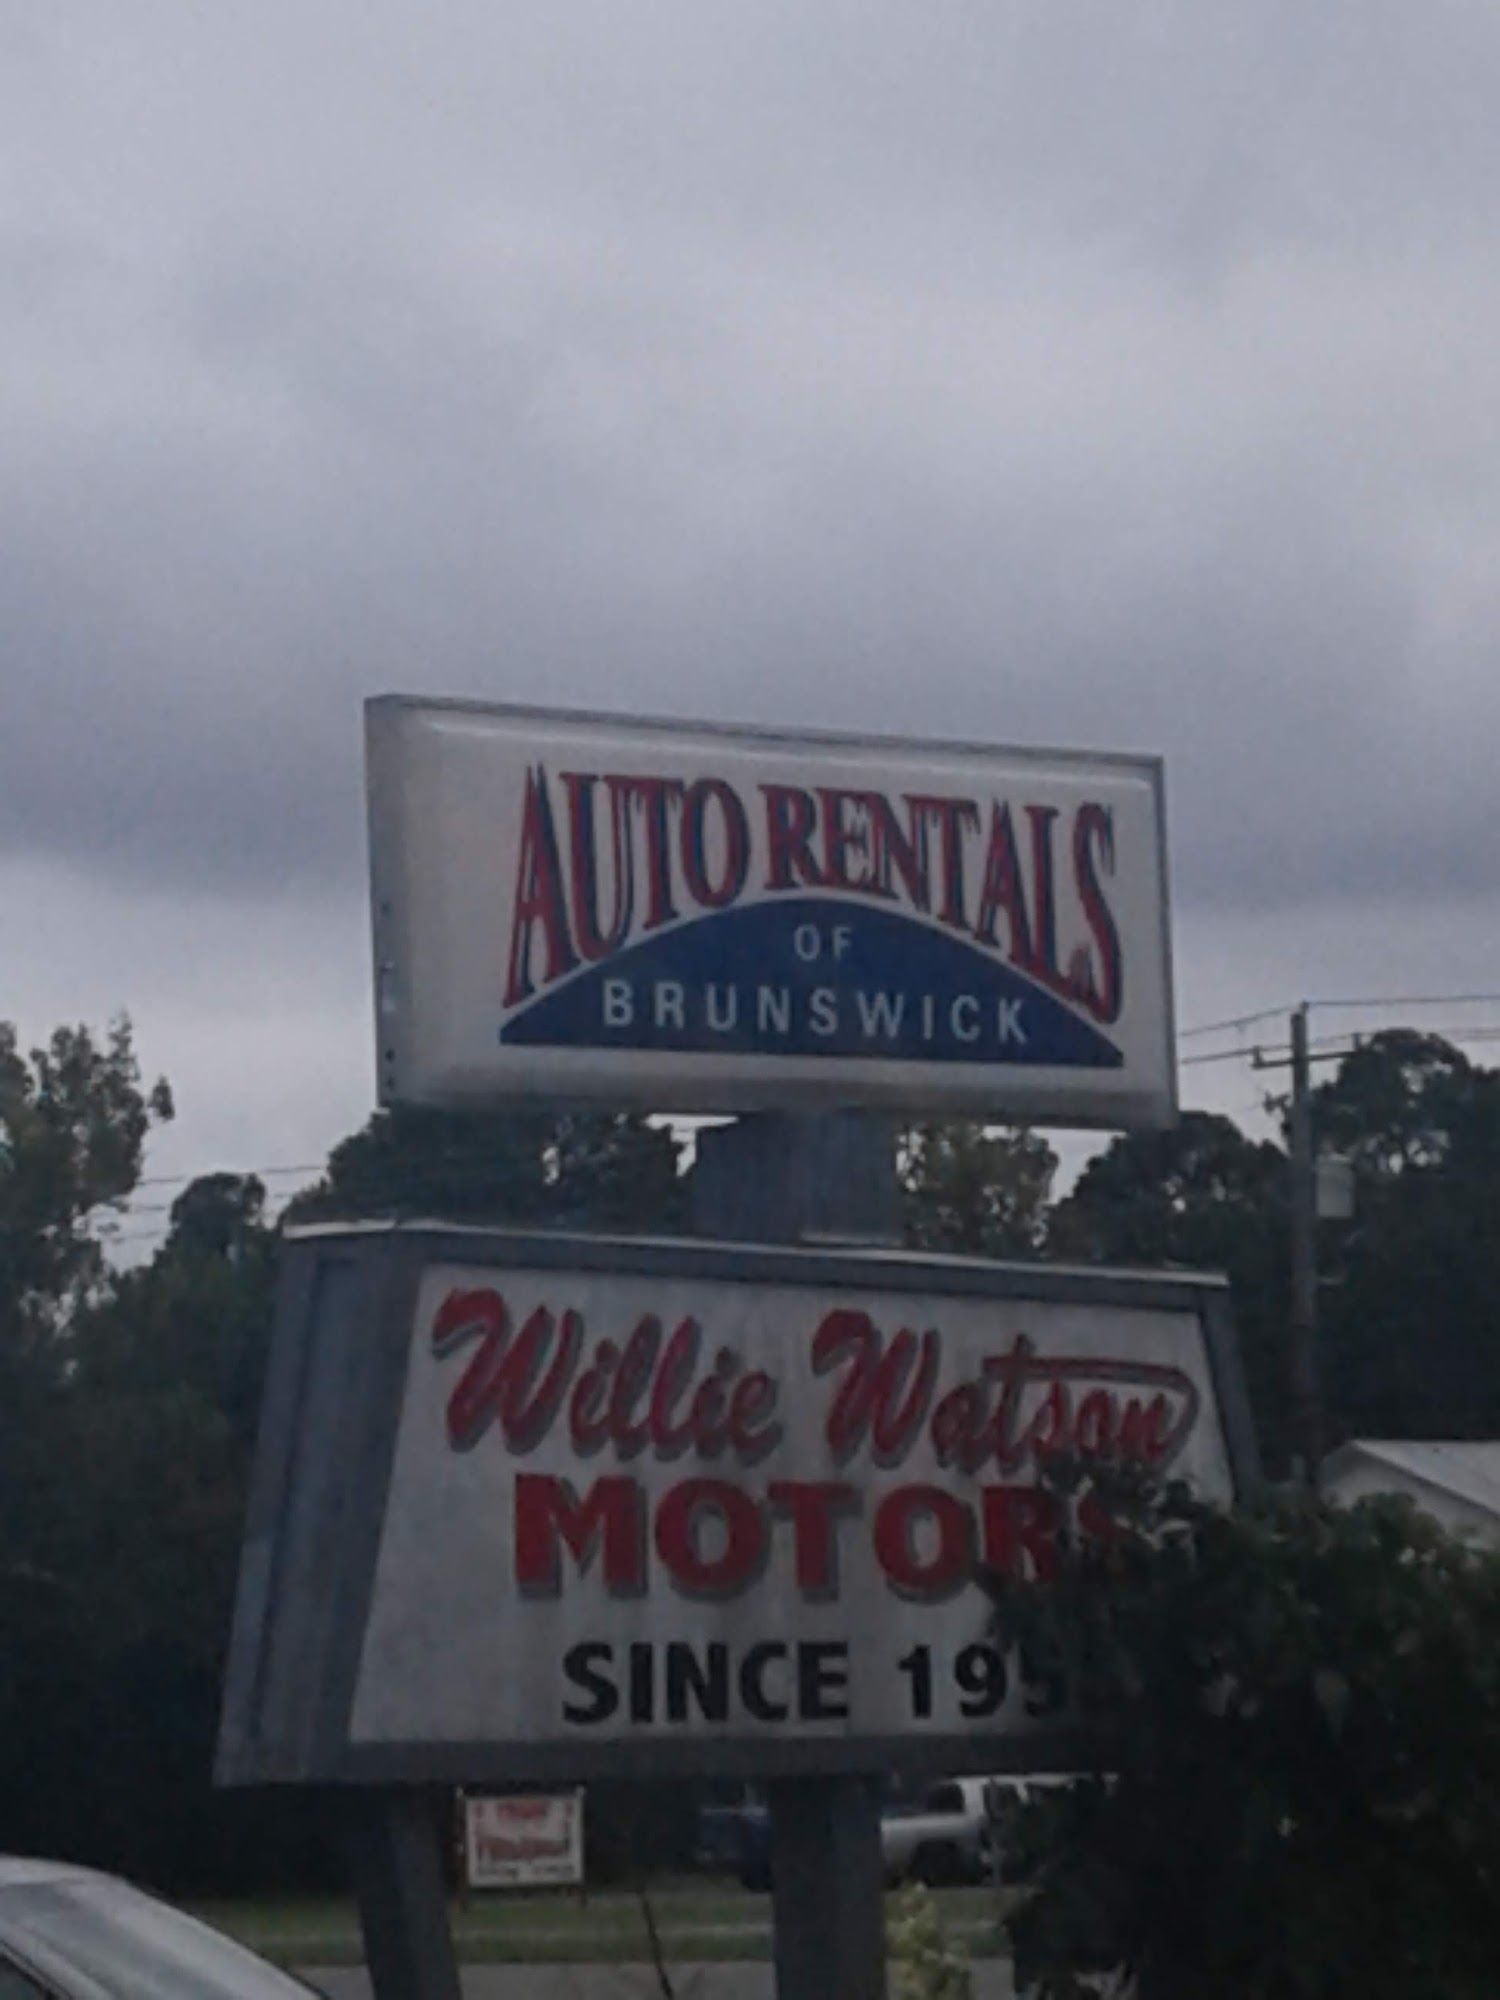 Willie Watson Motors, Inc.